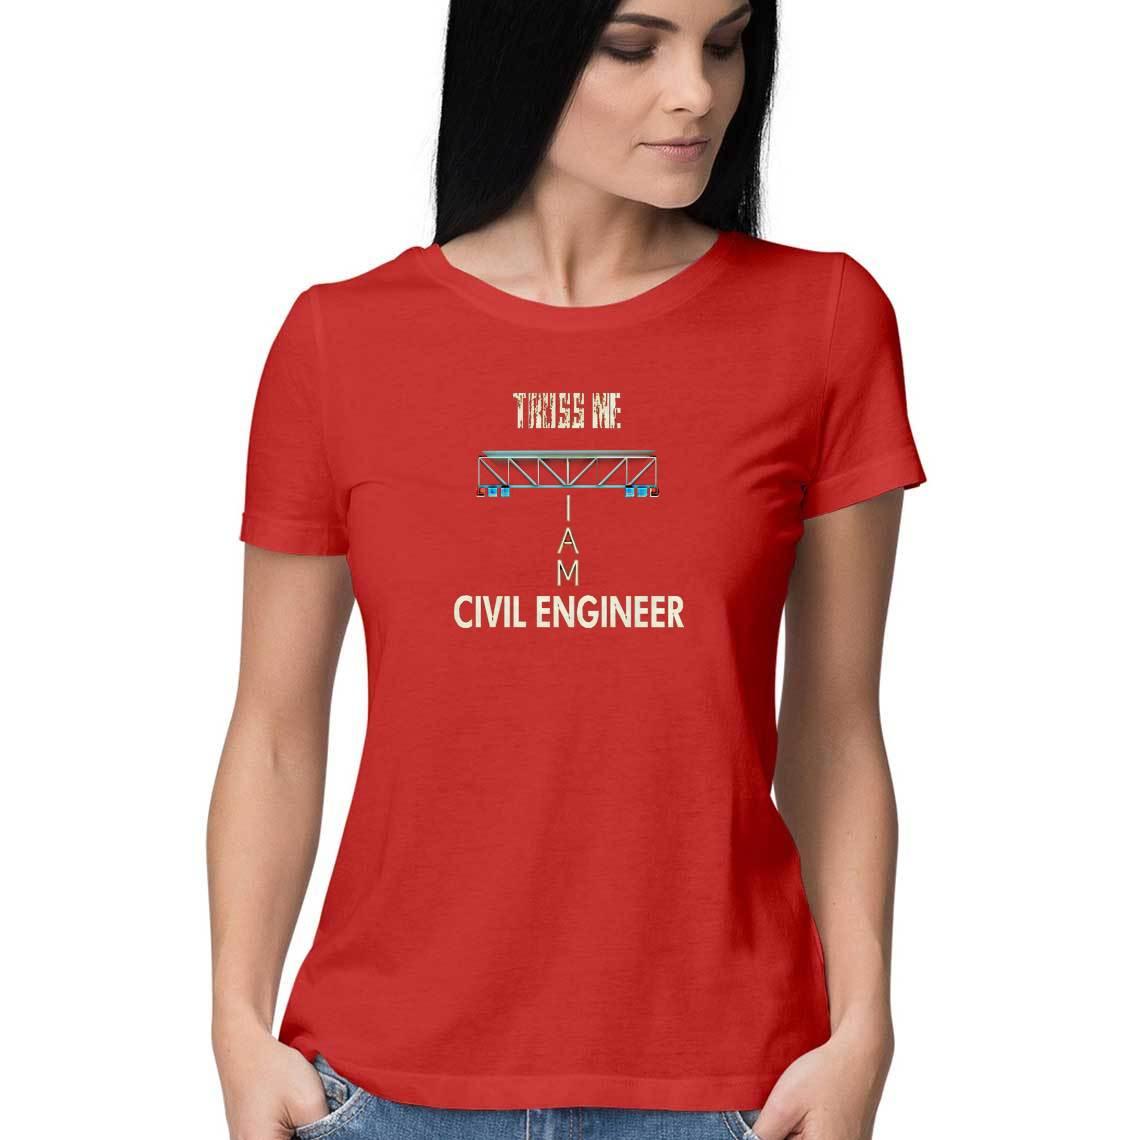 Civil Engineer T Shirt for Women D46